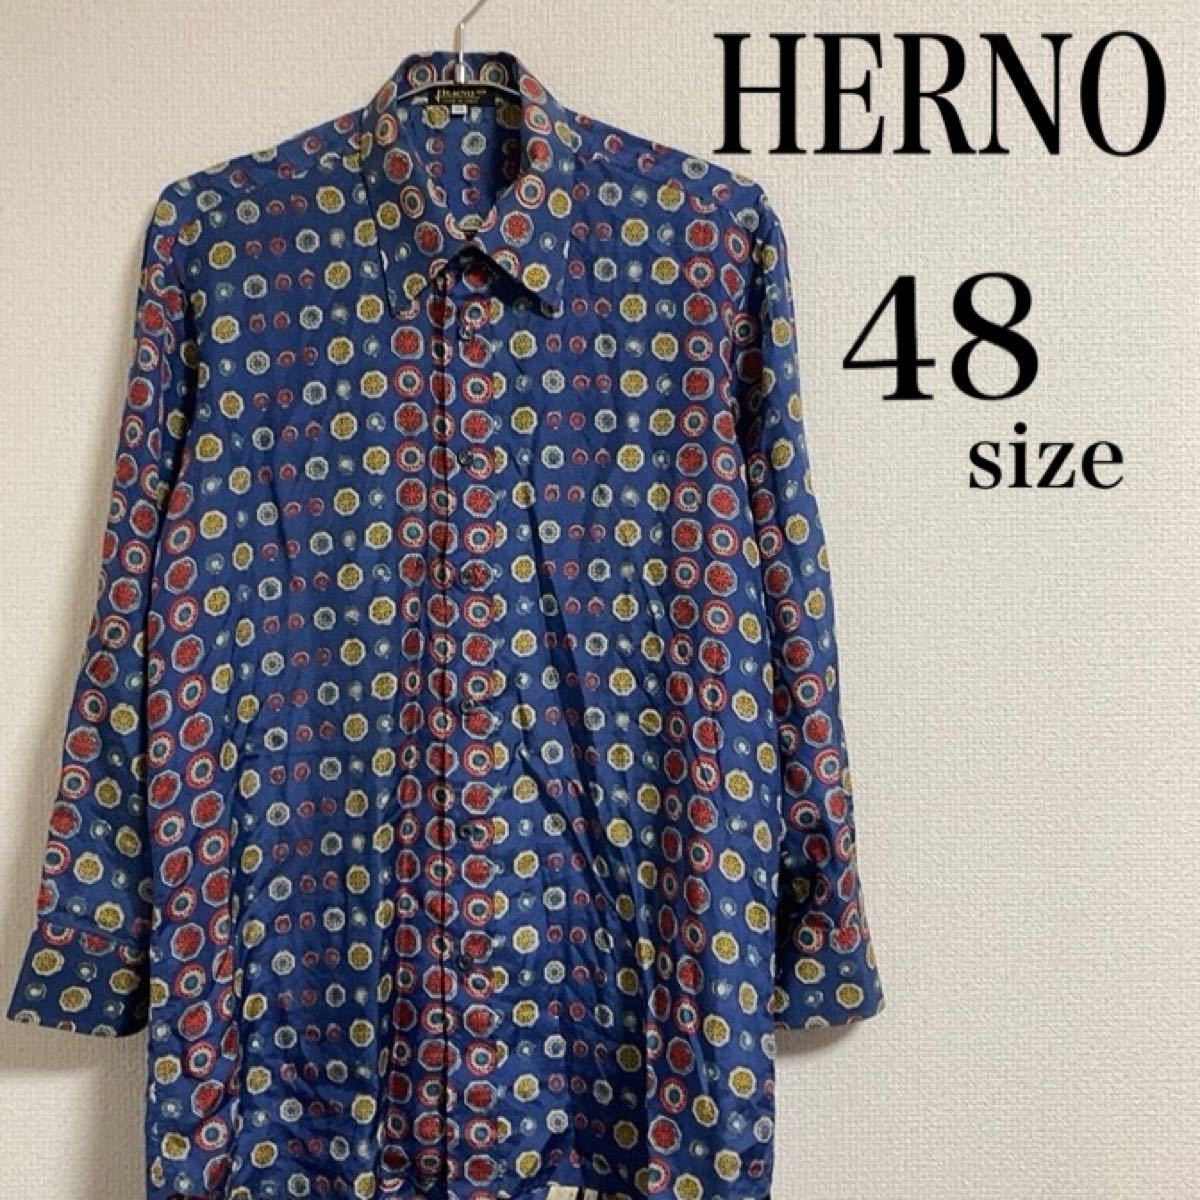 HERNO ヘルノ メンズ シャツ 48 シルク 長袖 総柄 レトロ ブルー系